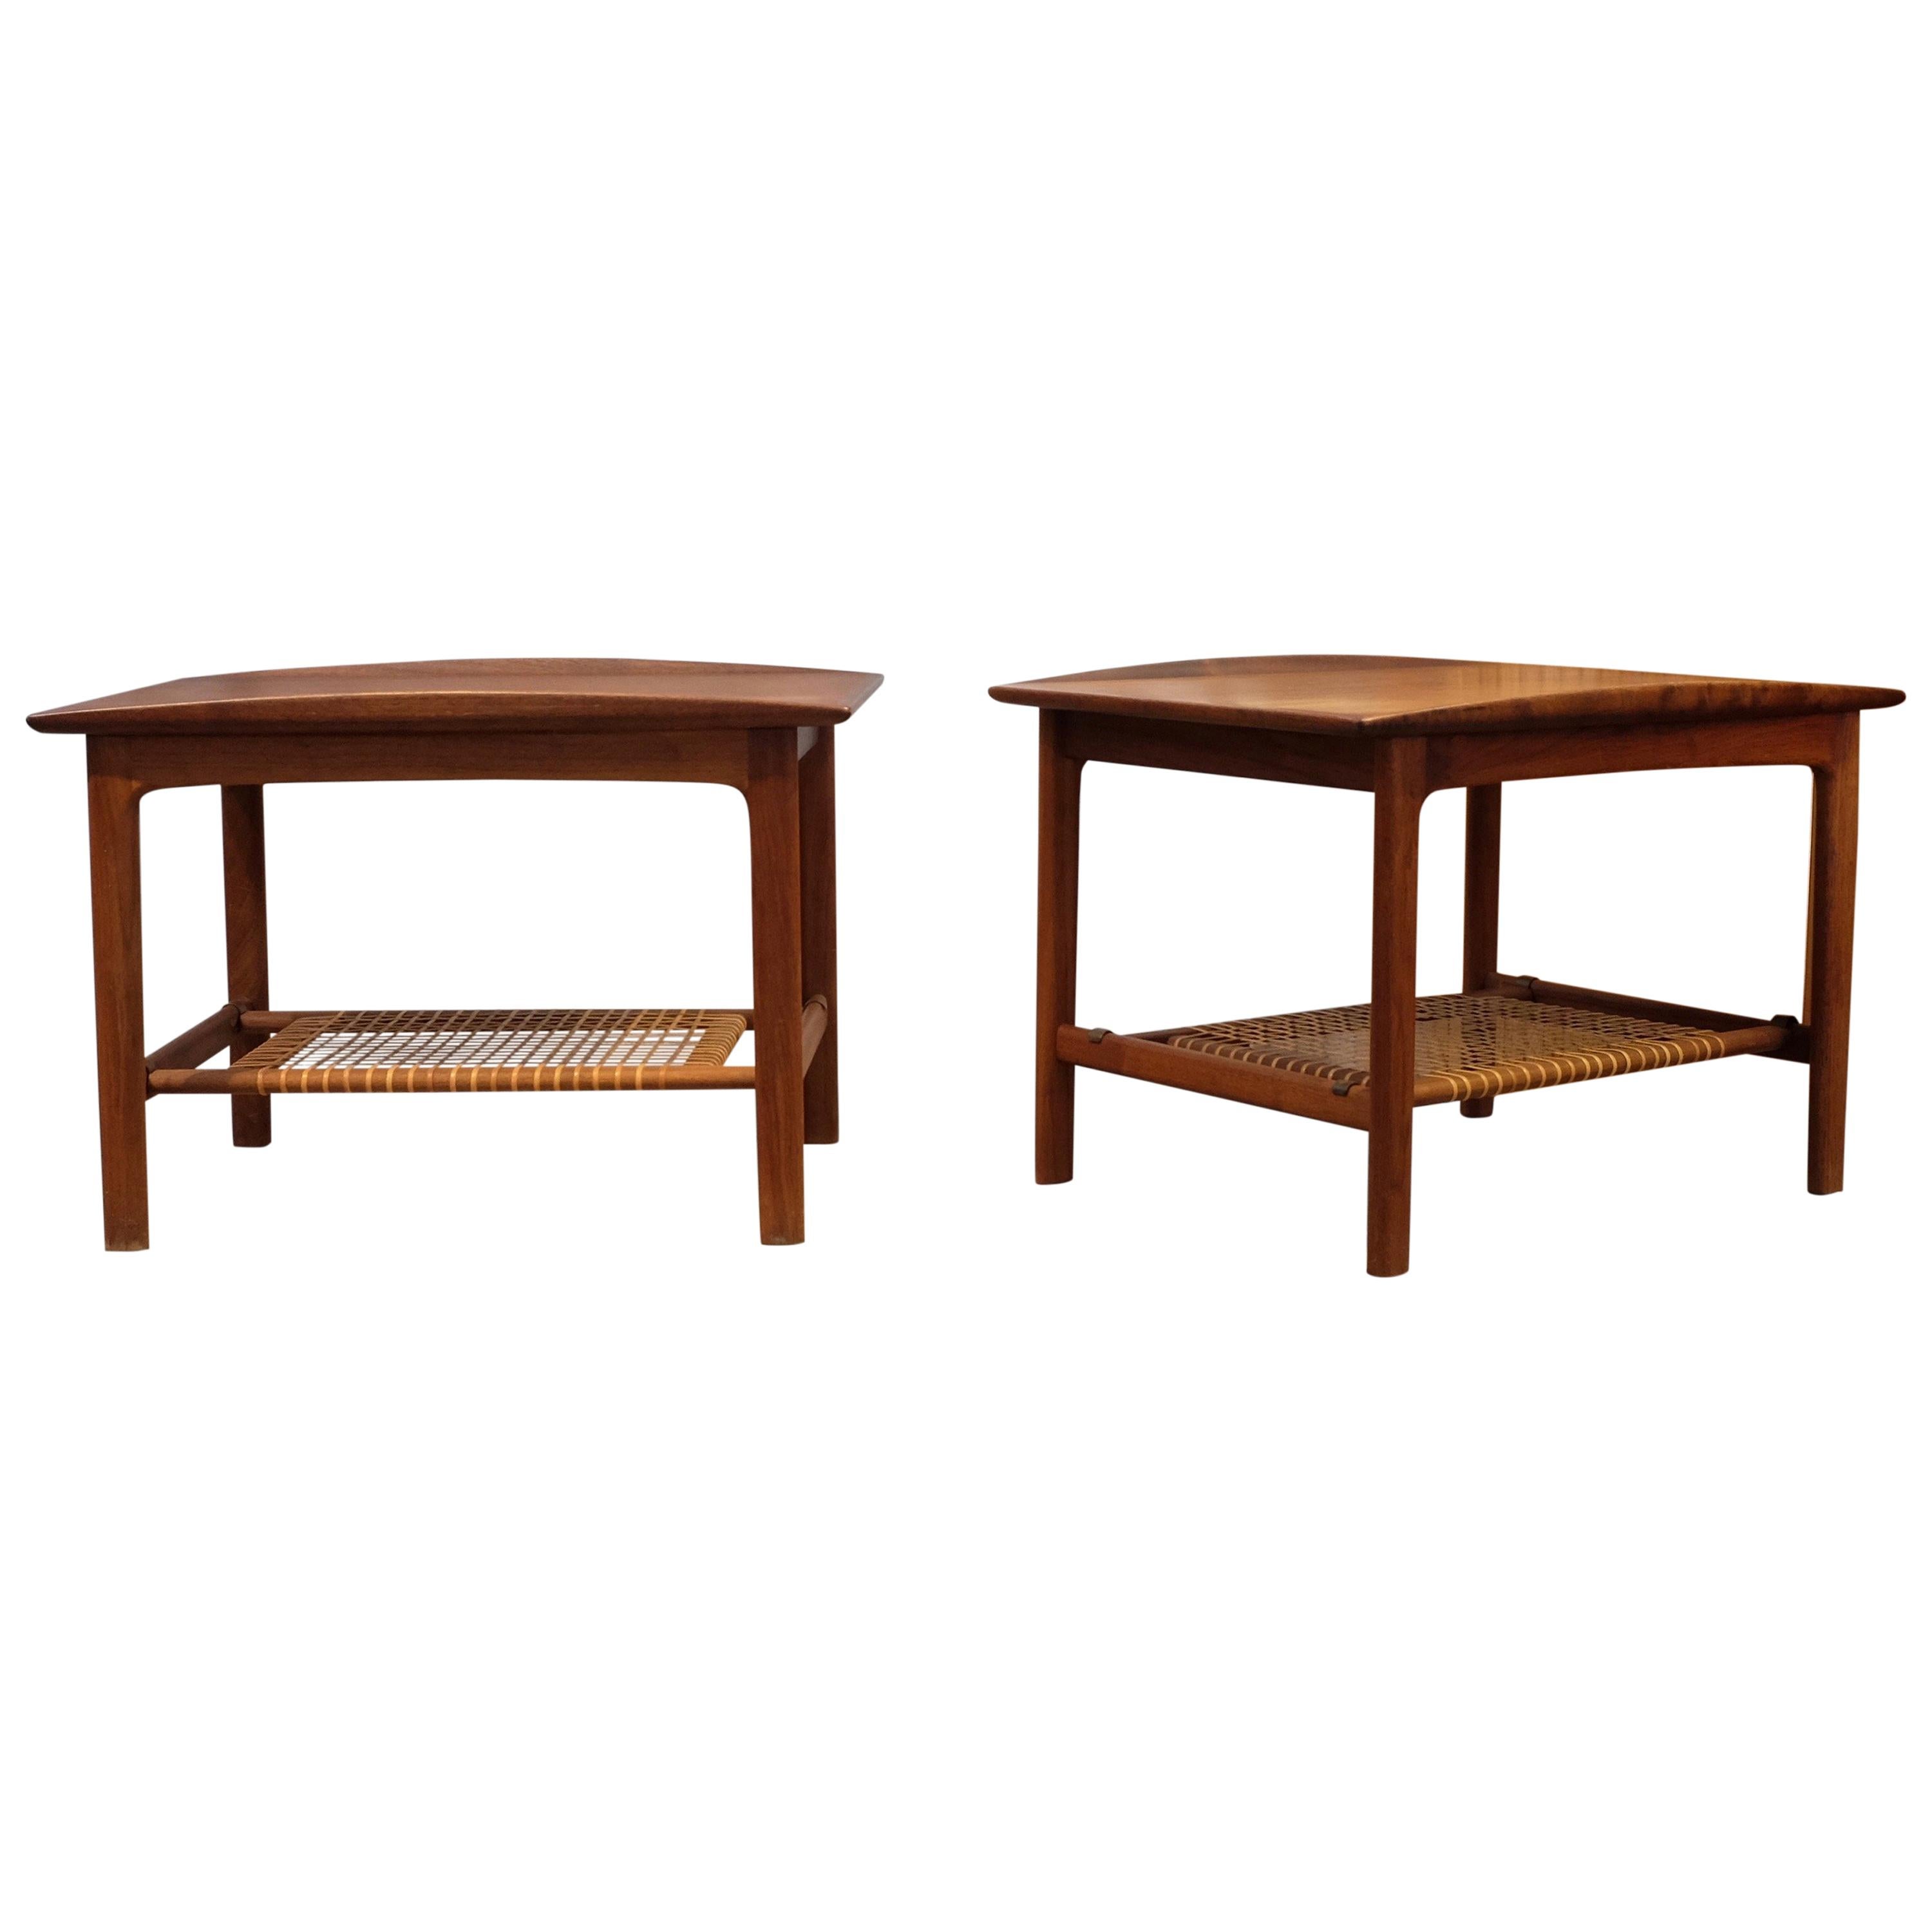 Pair of Folke Ohlsson Teak Side Tables / Bedside Tables for DUX, 1950s